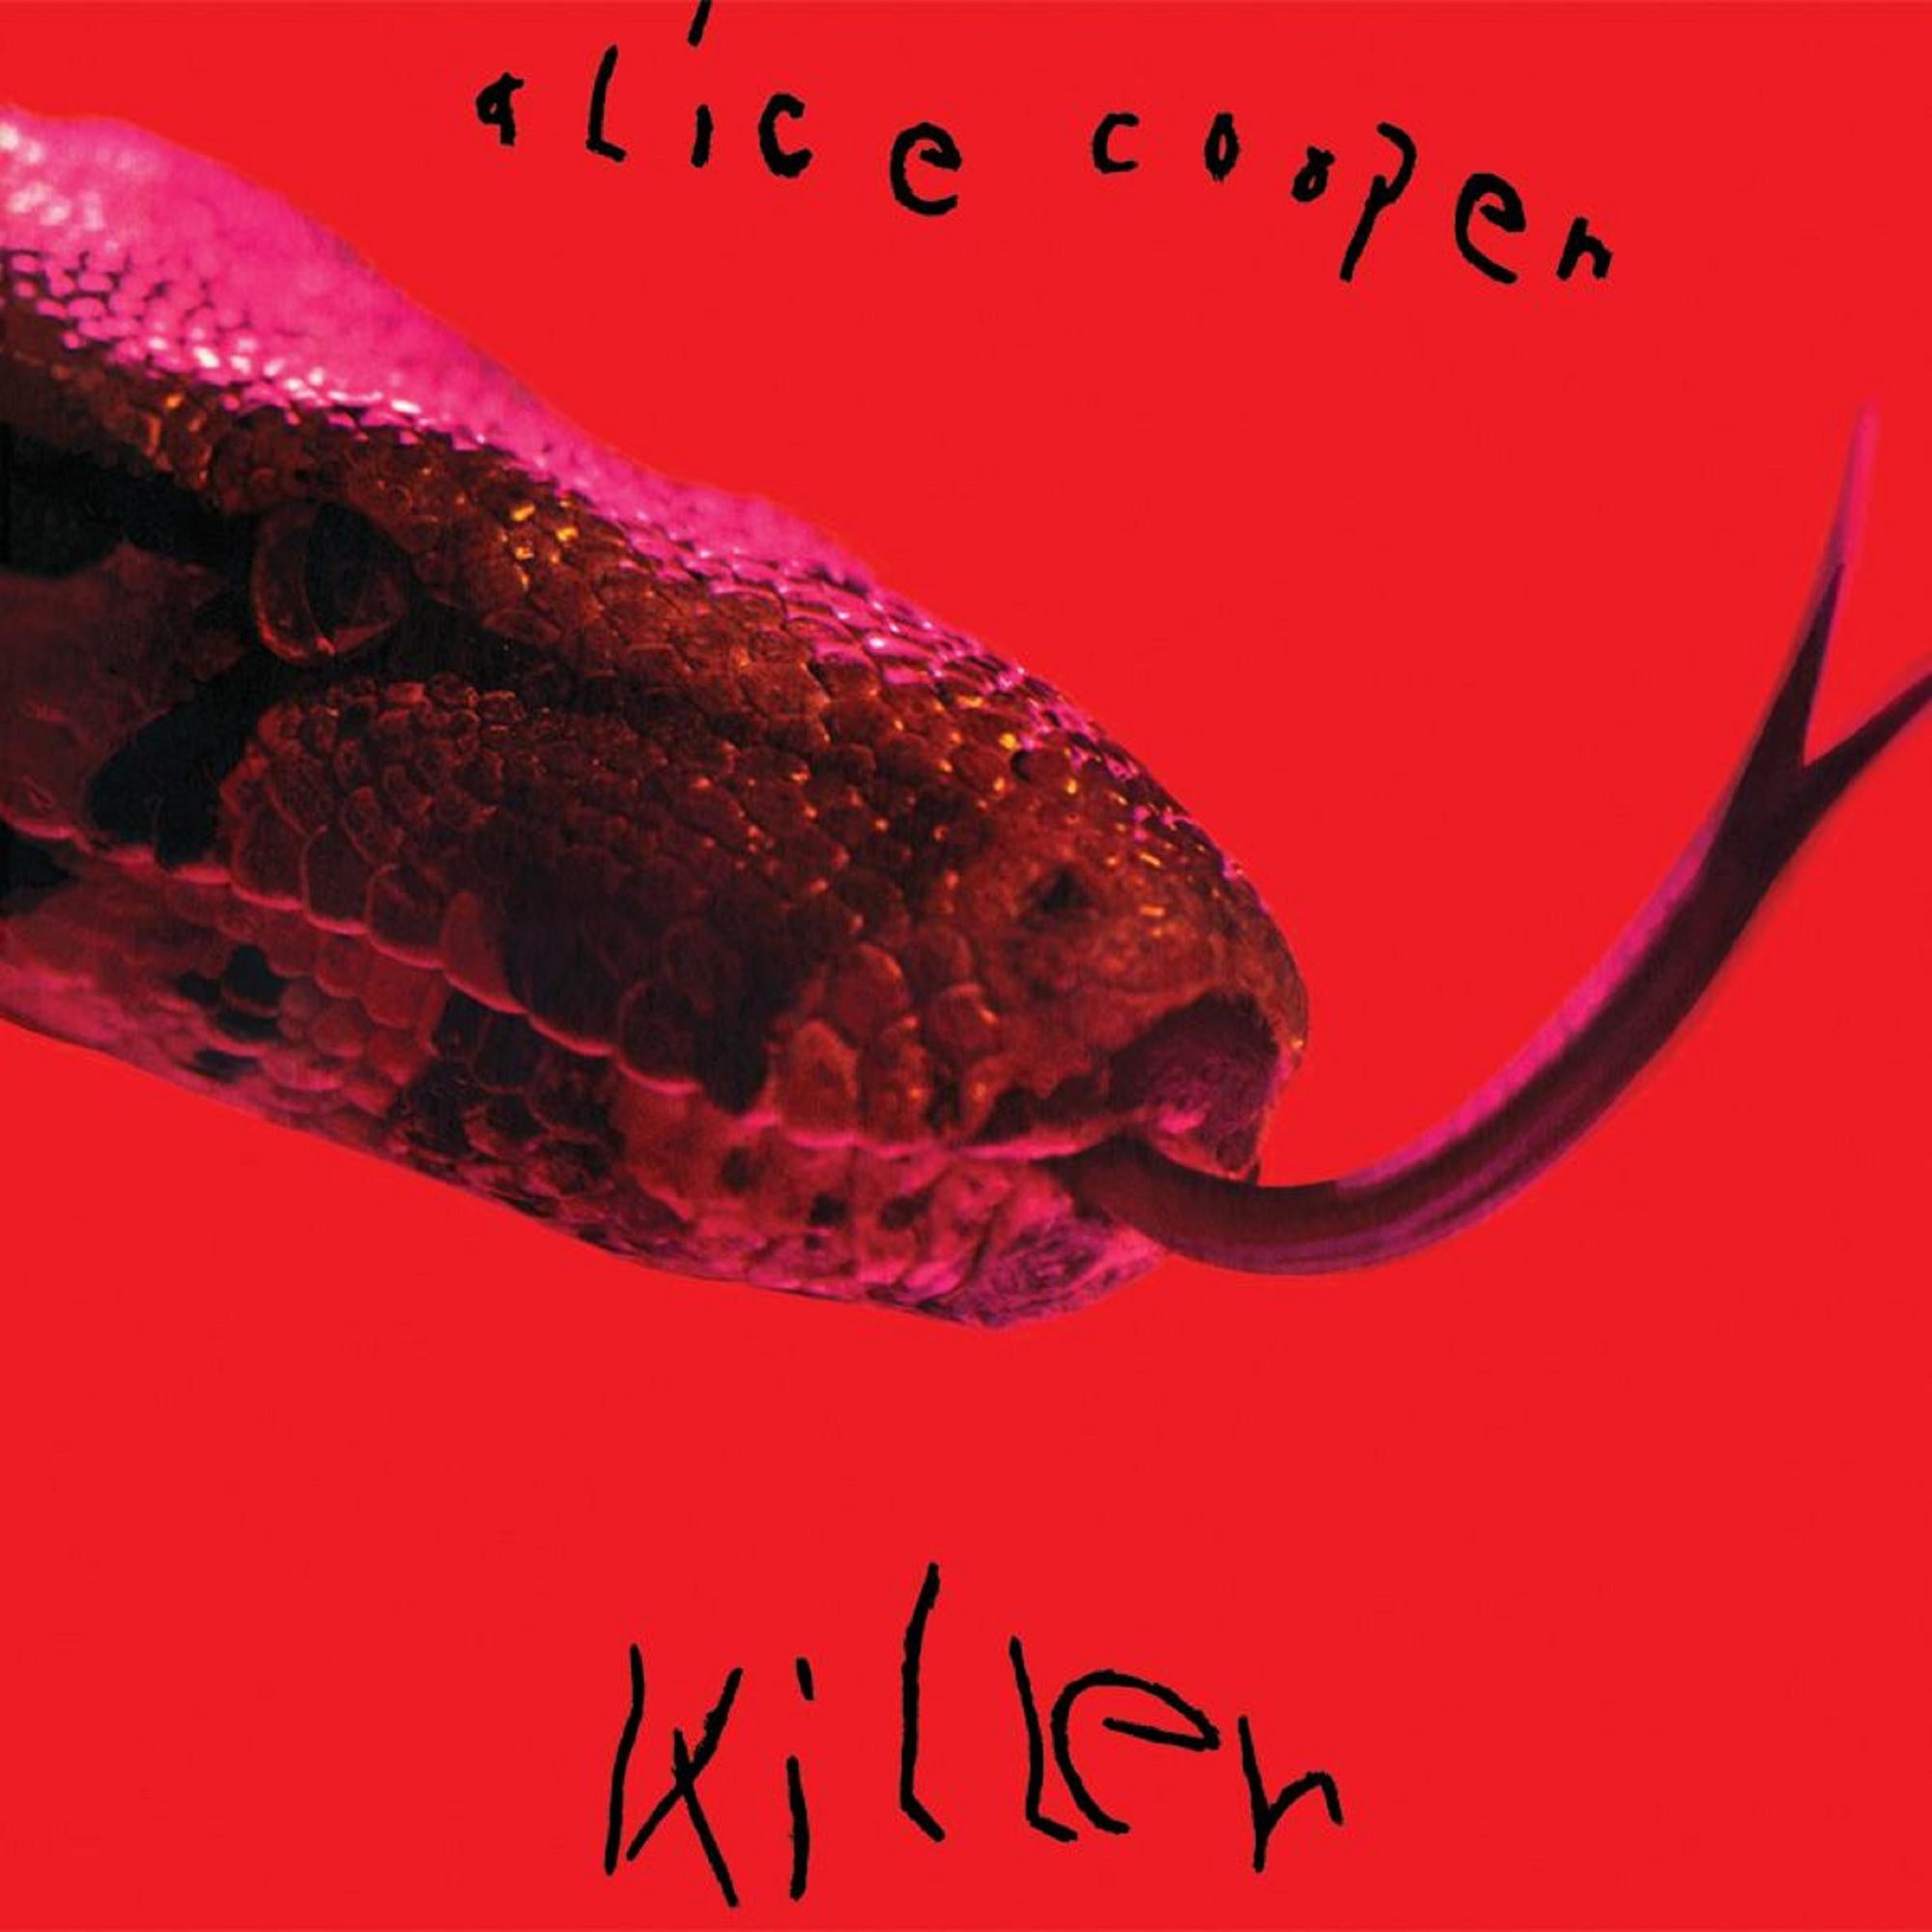 Alice Cooper – Killer (1971) - New LP Record 2021 Friday Music 180 gram Vinyl & Calendar - Classic Rock